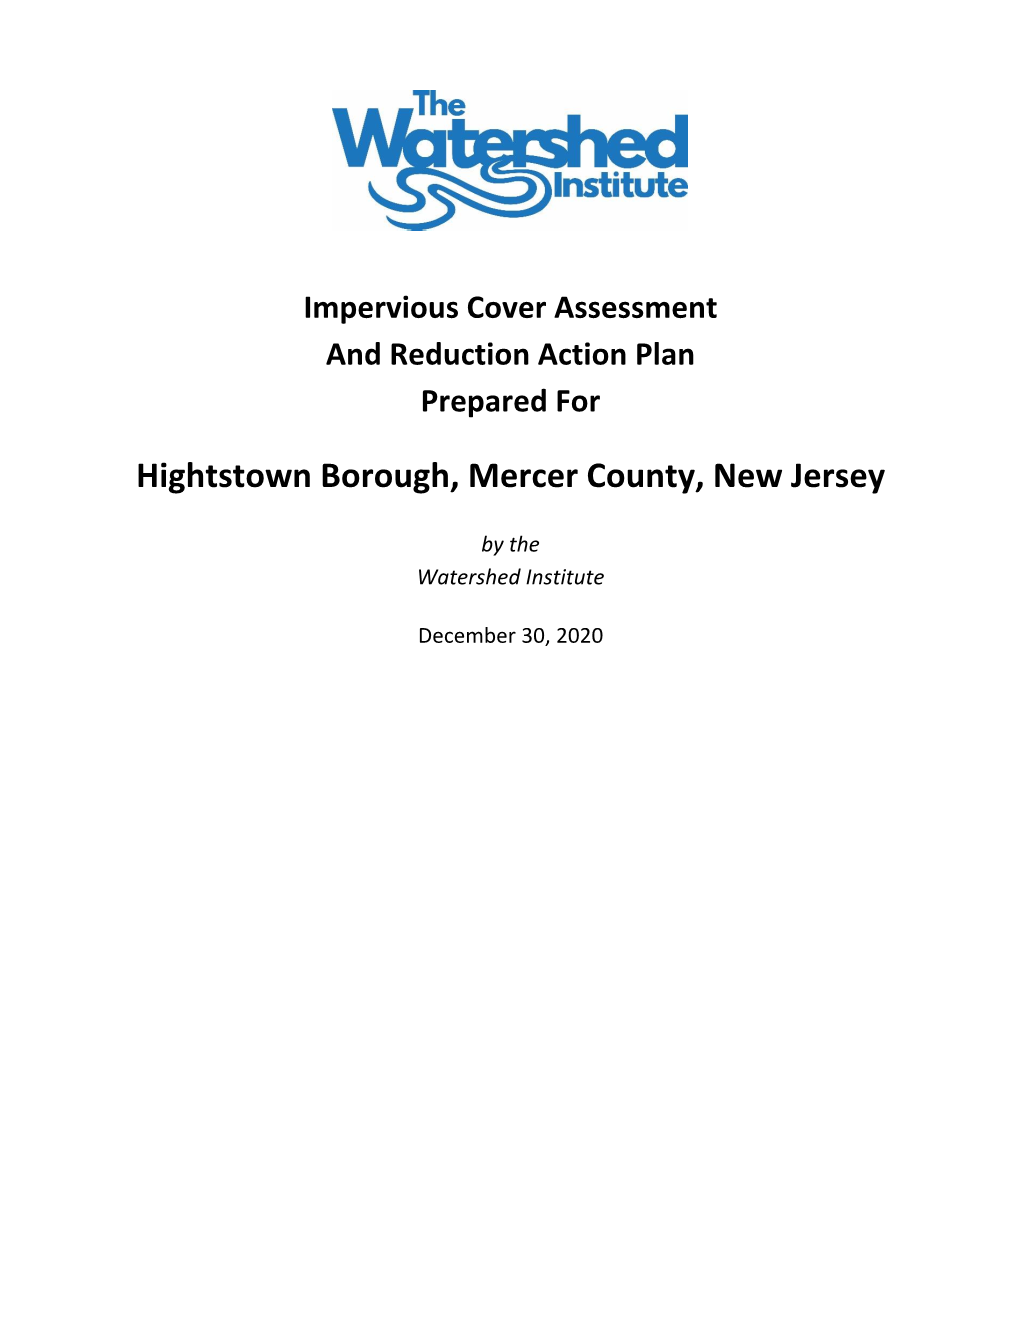 Hightstown Borough, Mercer County, New Jersey